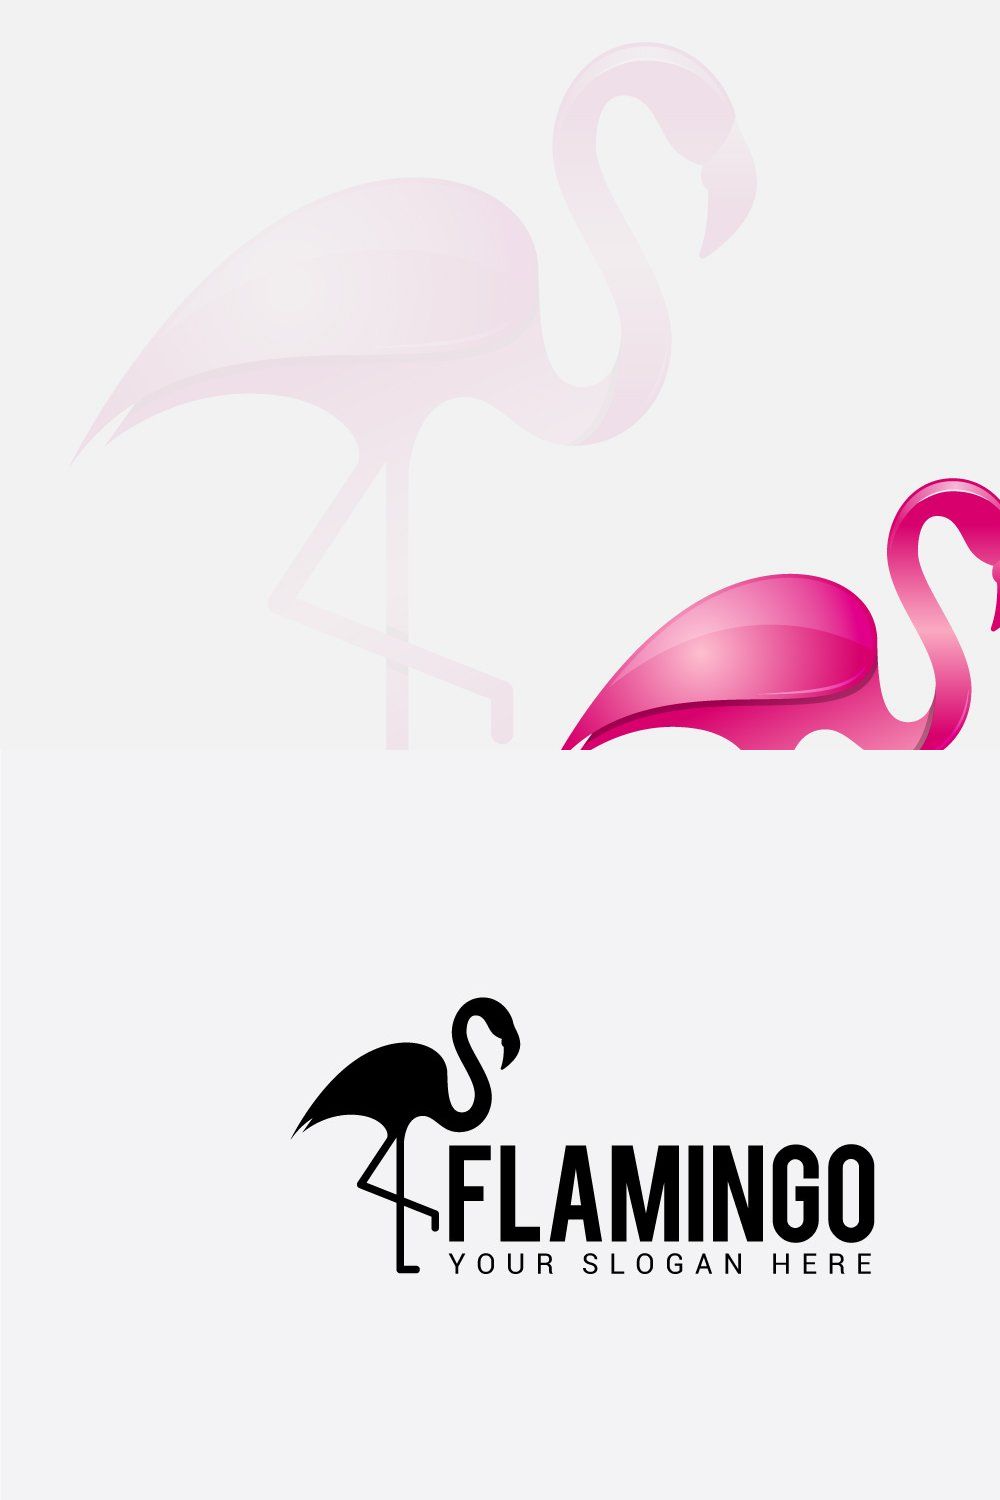 flamingo pinterest preview image.